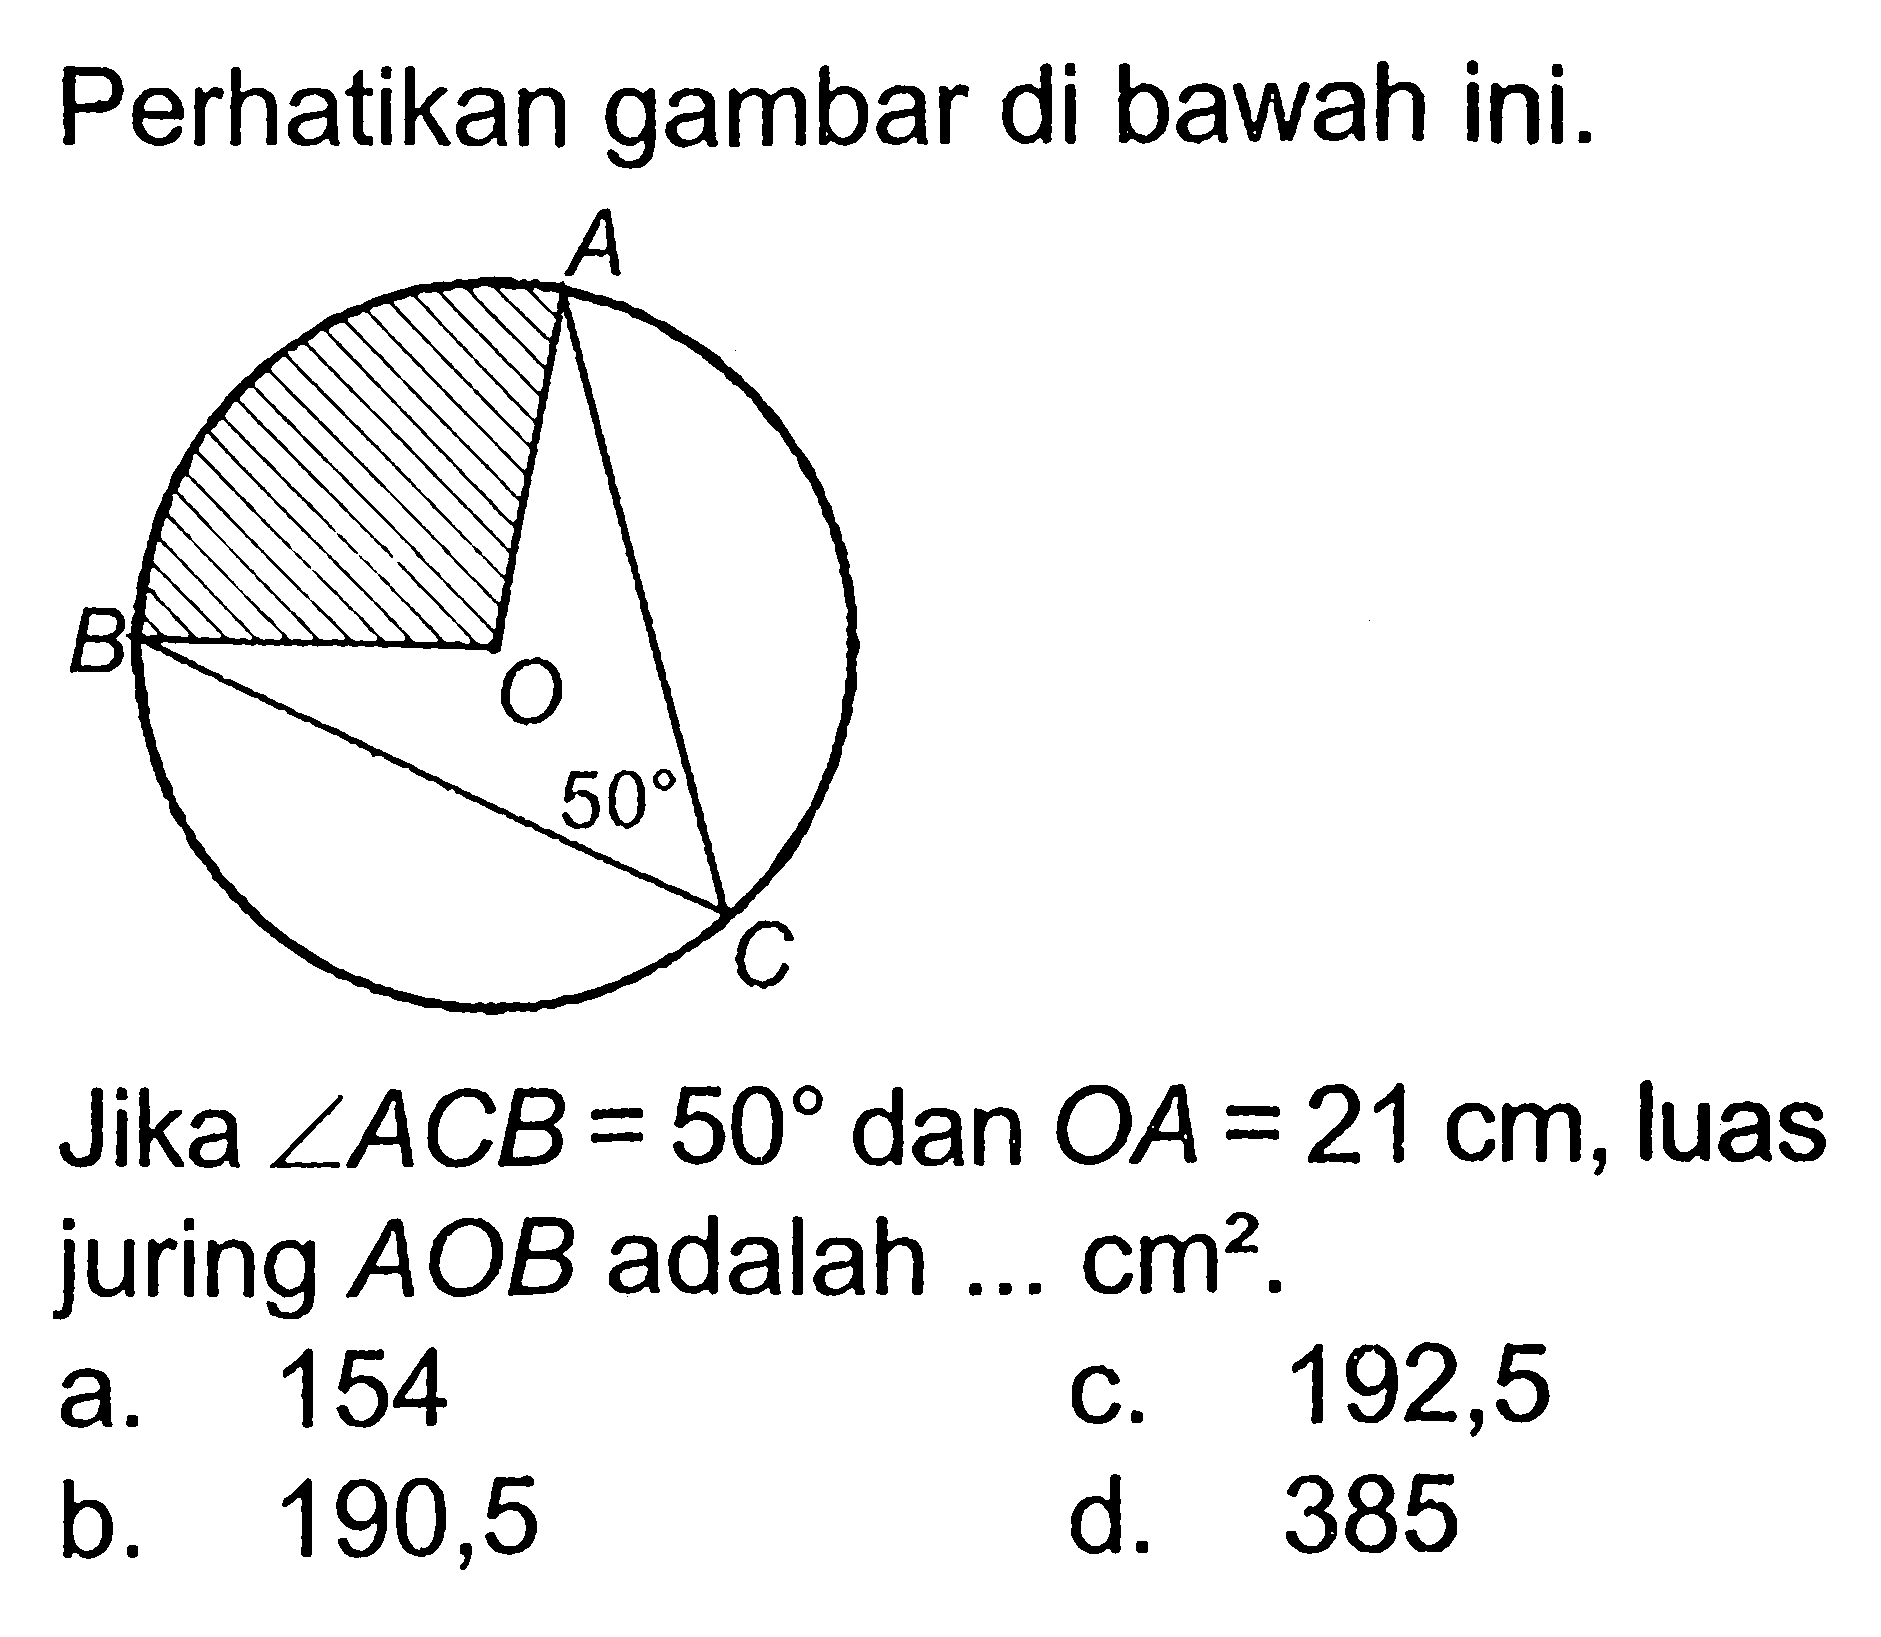 Perhatikan gambar di bawah ini. 50 Jika sudut ACB=50 dan OA=21 cm, luas juring AOB adalah ... cm^2.